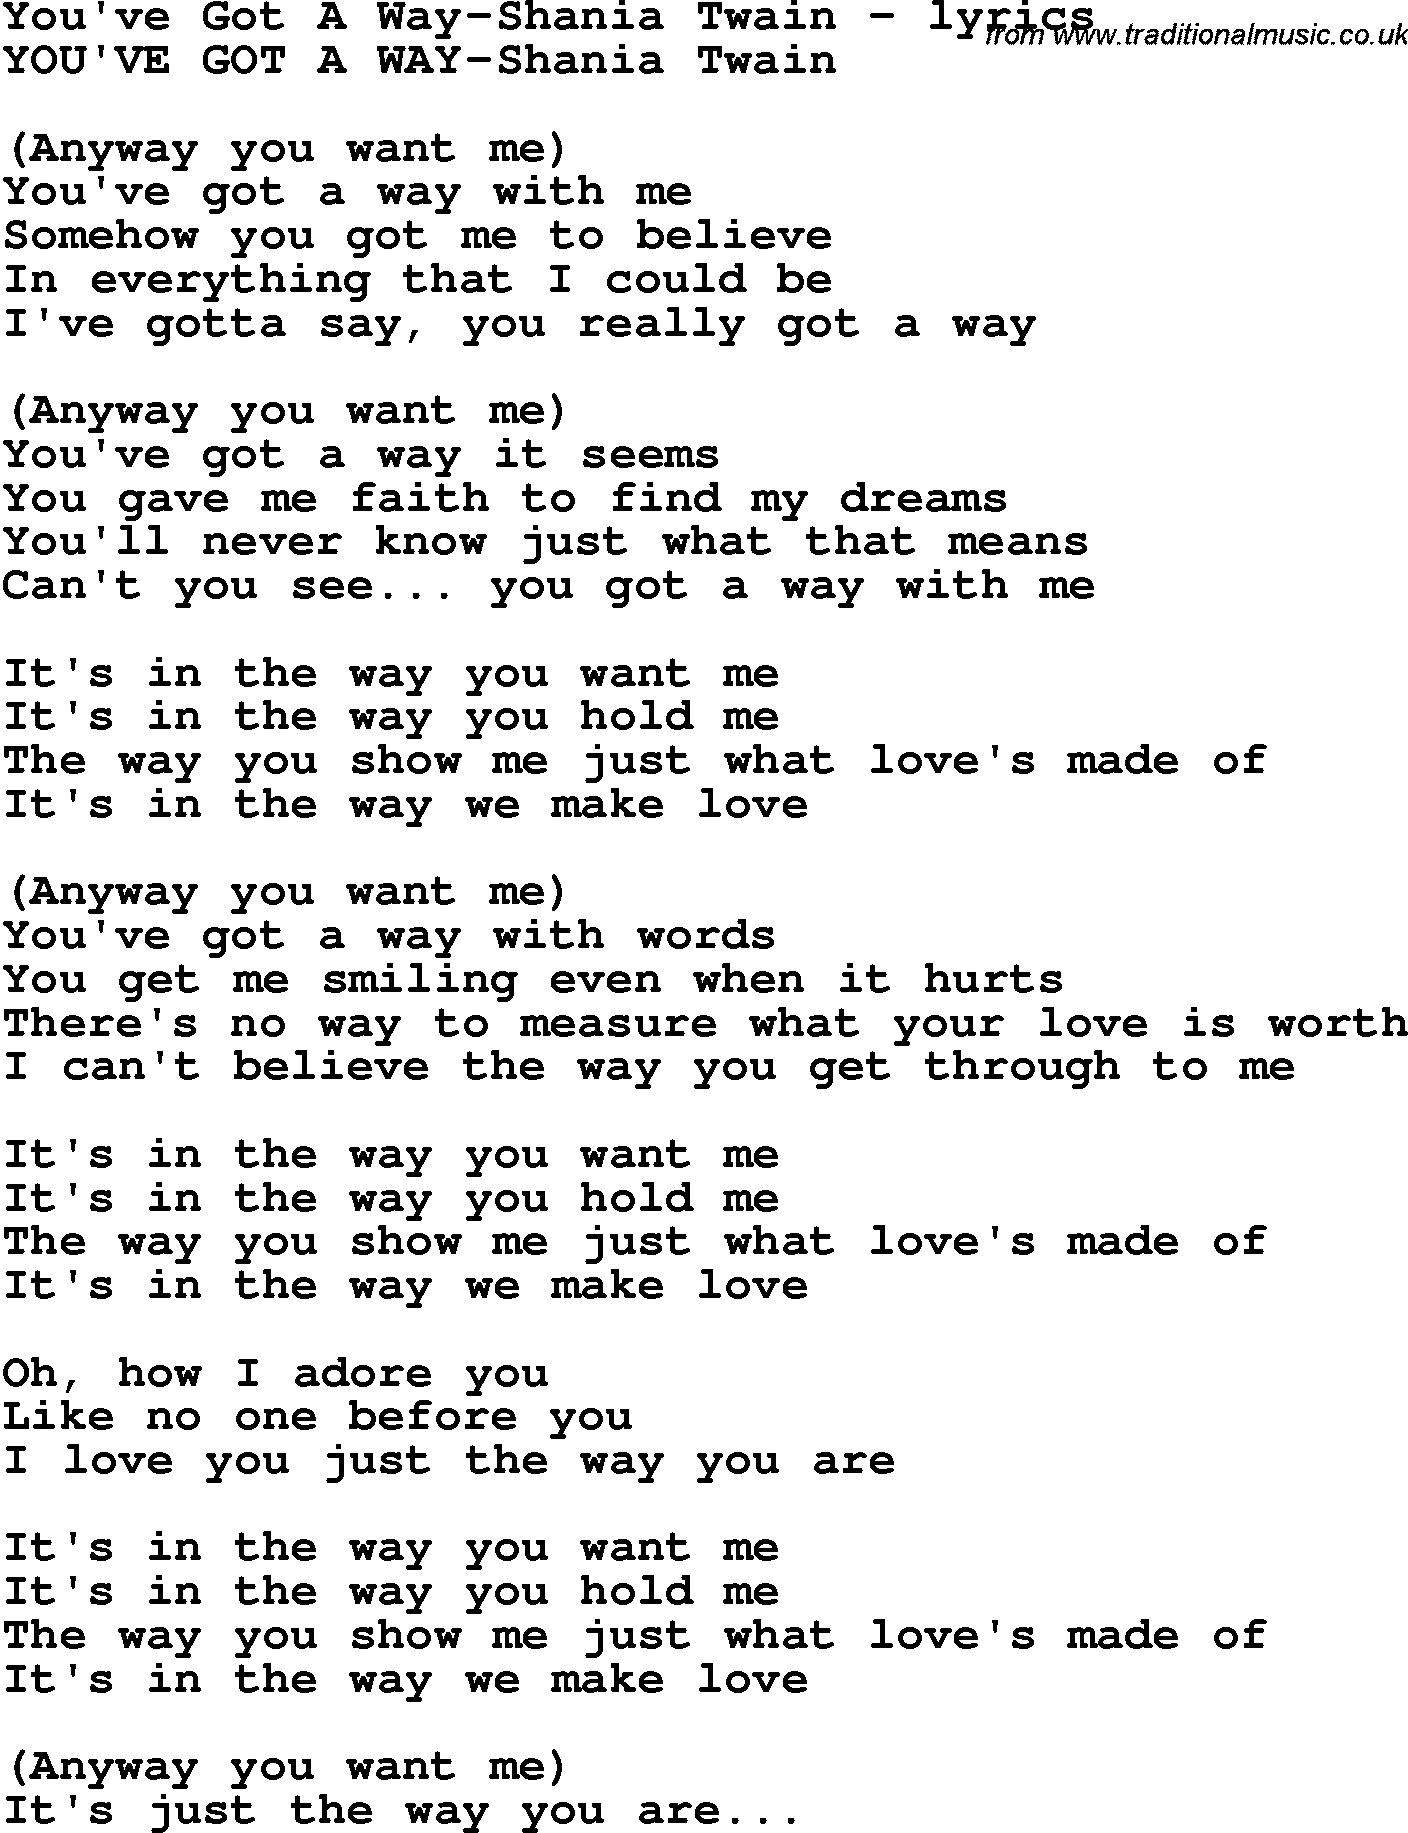 Love Song Lyrics for: You've Got A Way-Shania Twain